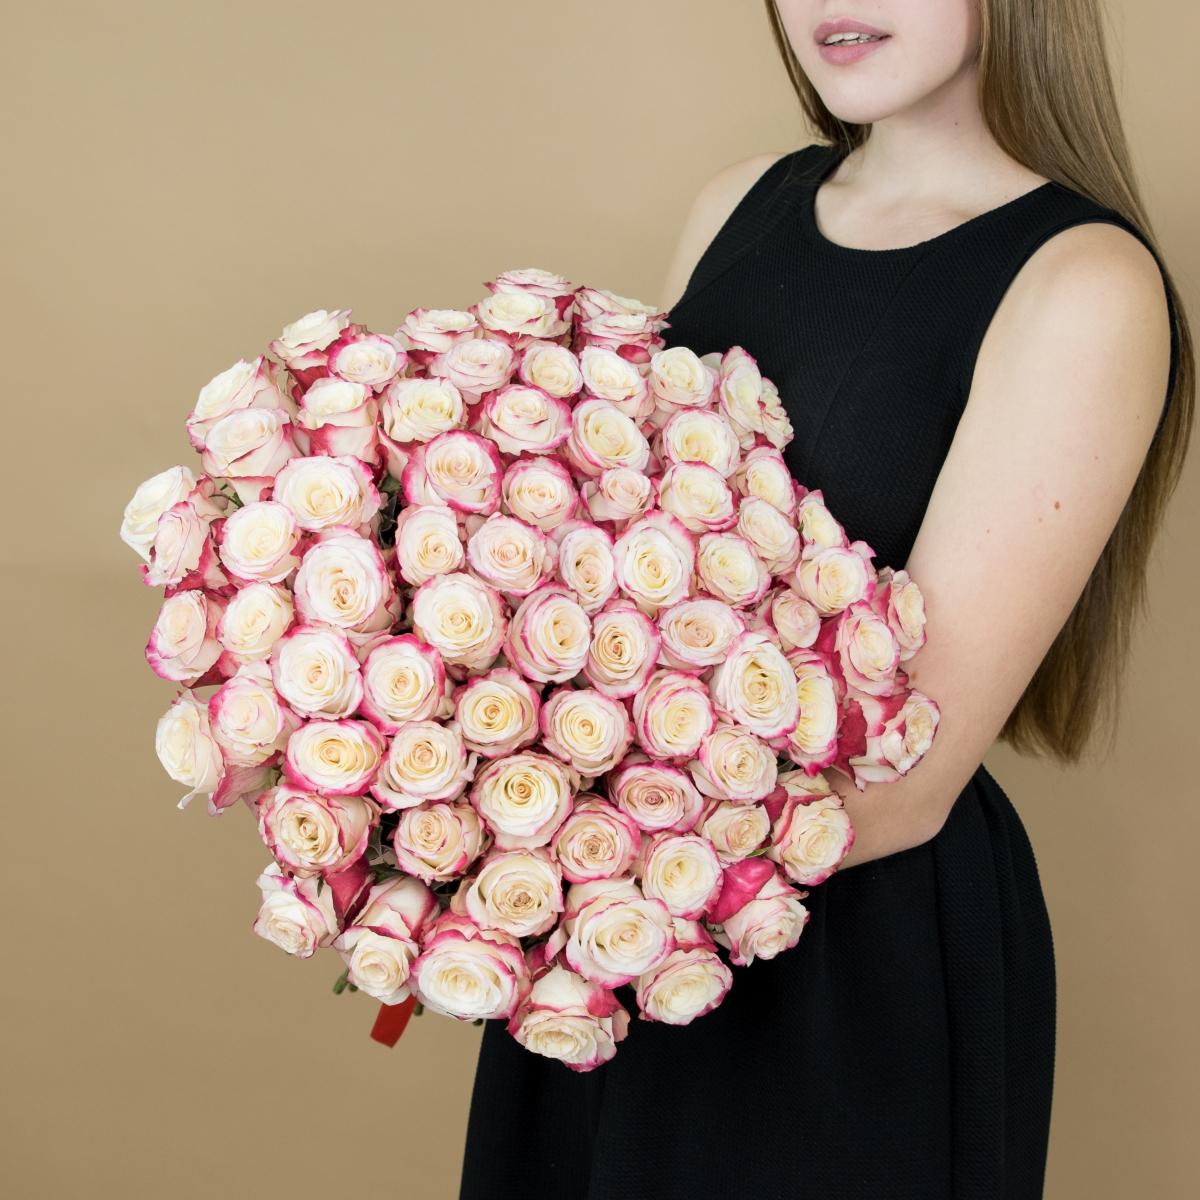 Розы красно-белые 101 шт. (40 см) код  15486kir